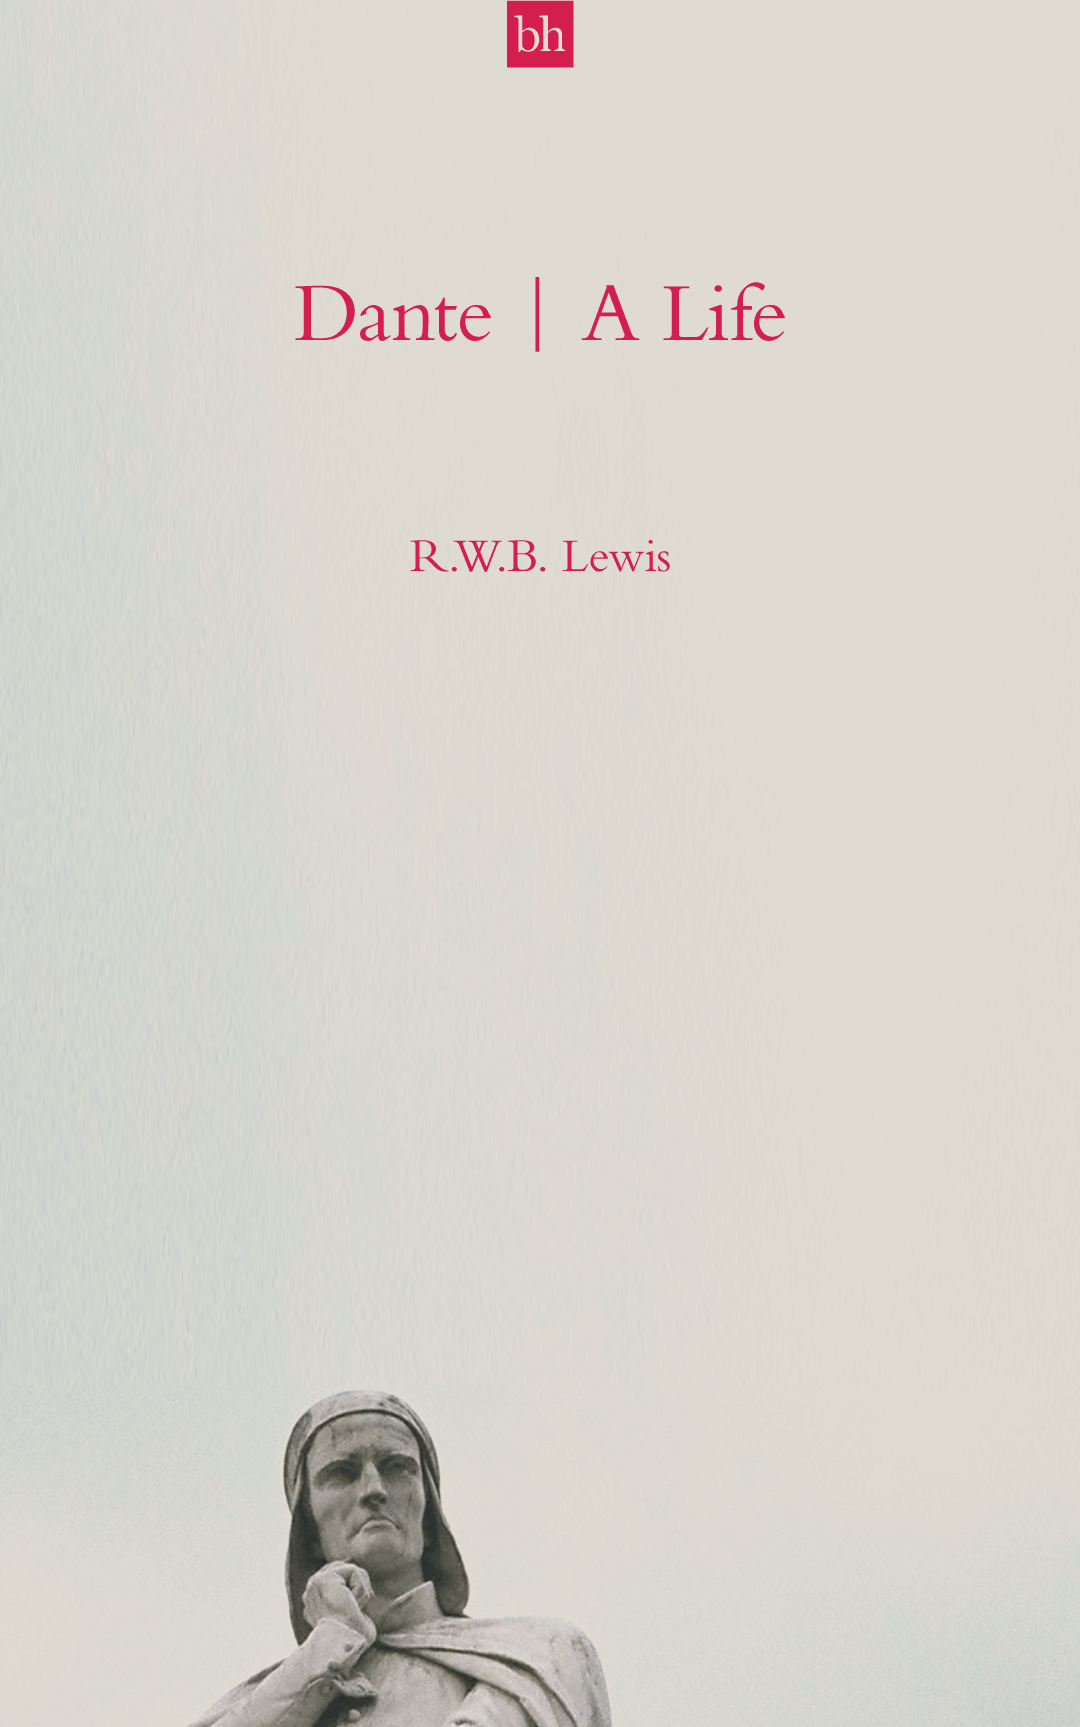 Dante | A Life by R.W.B. Lewis